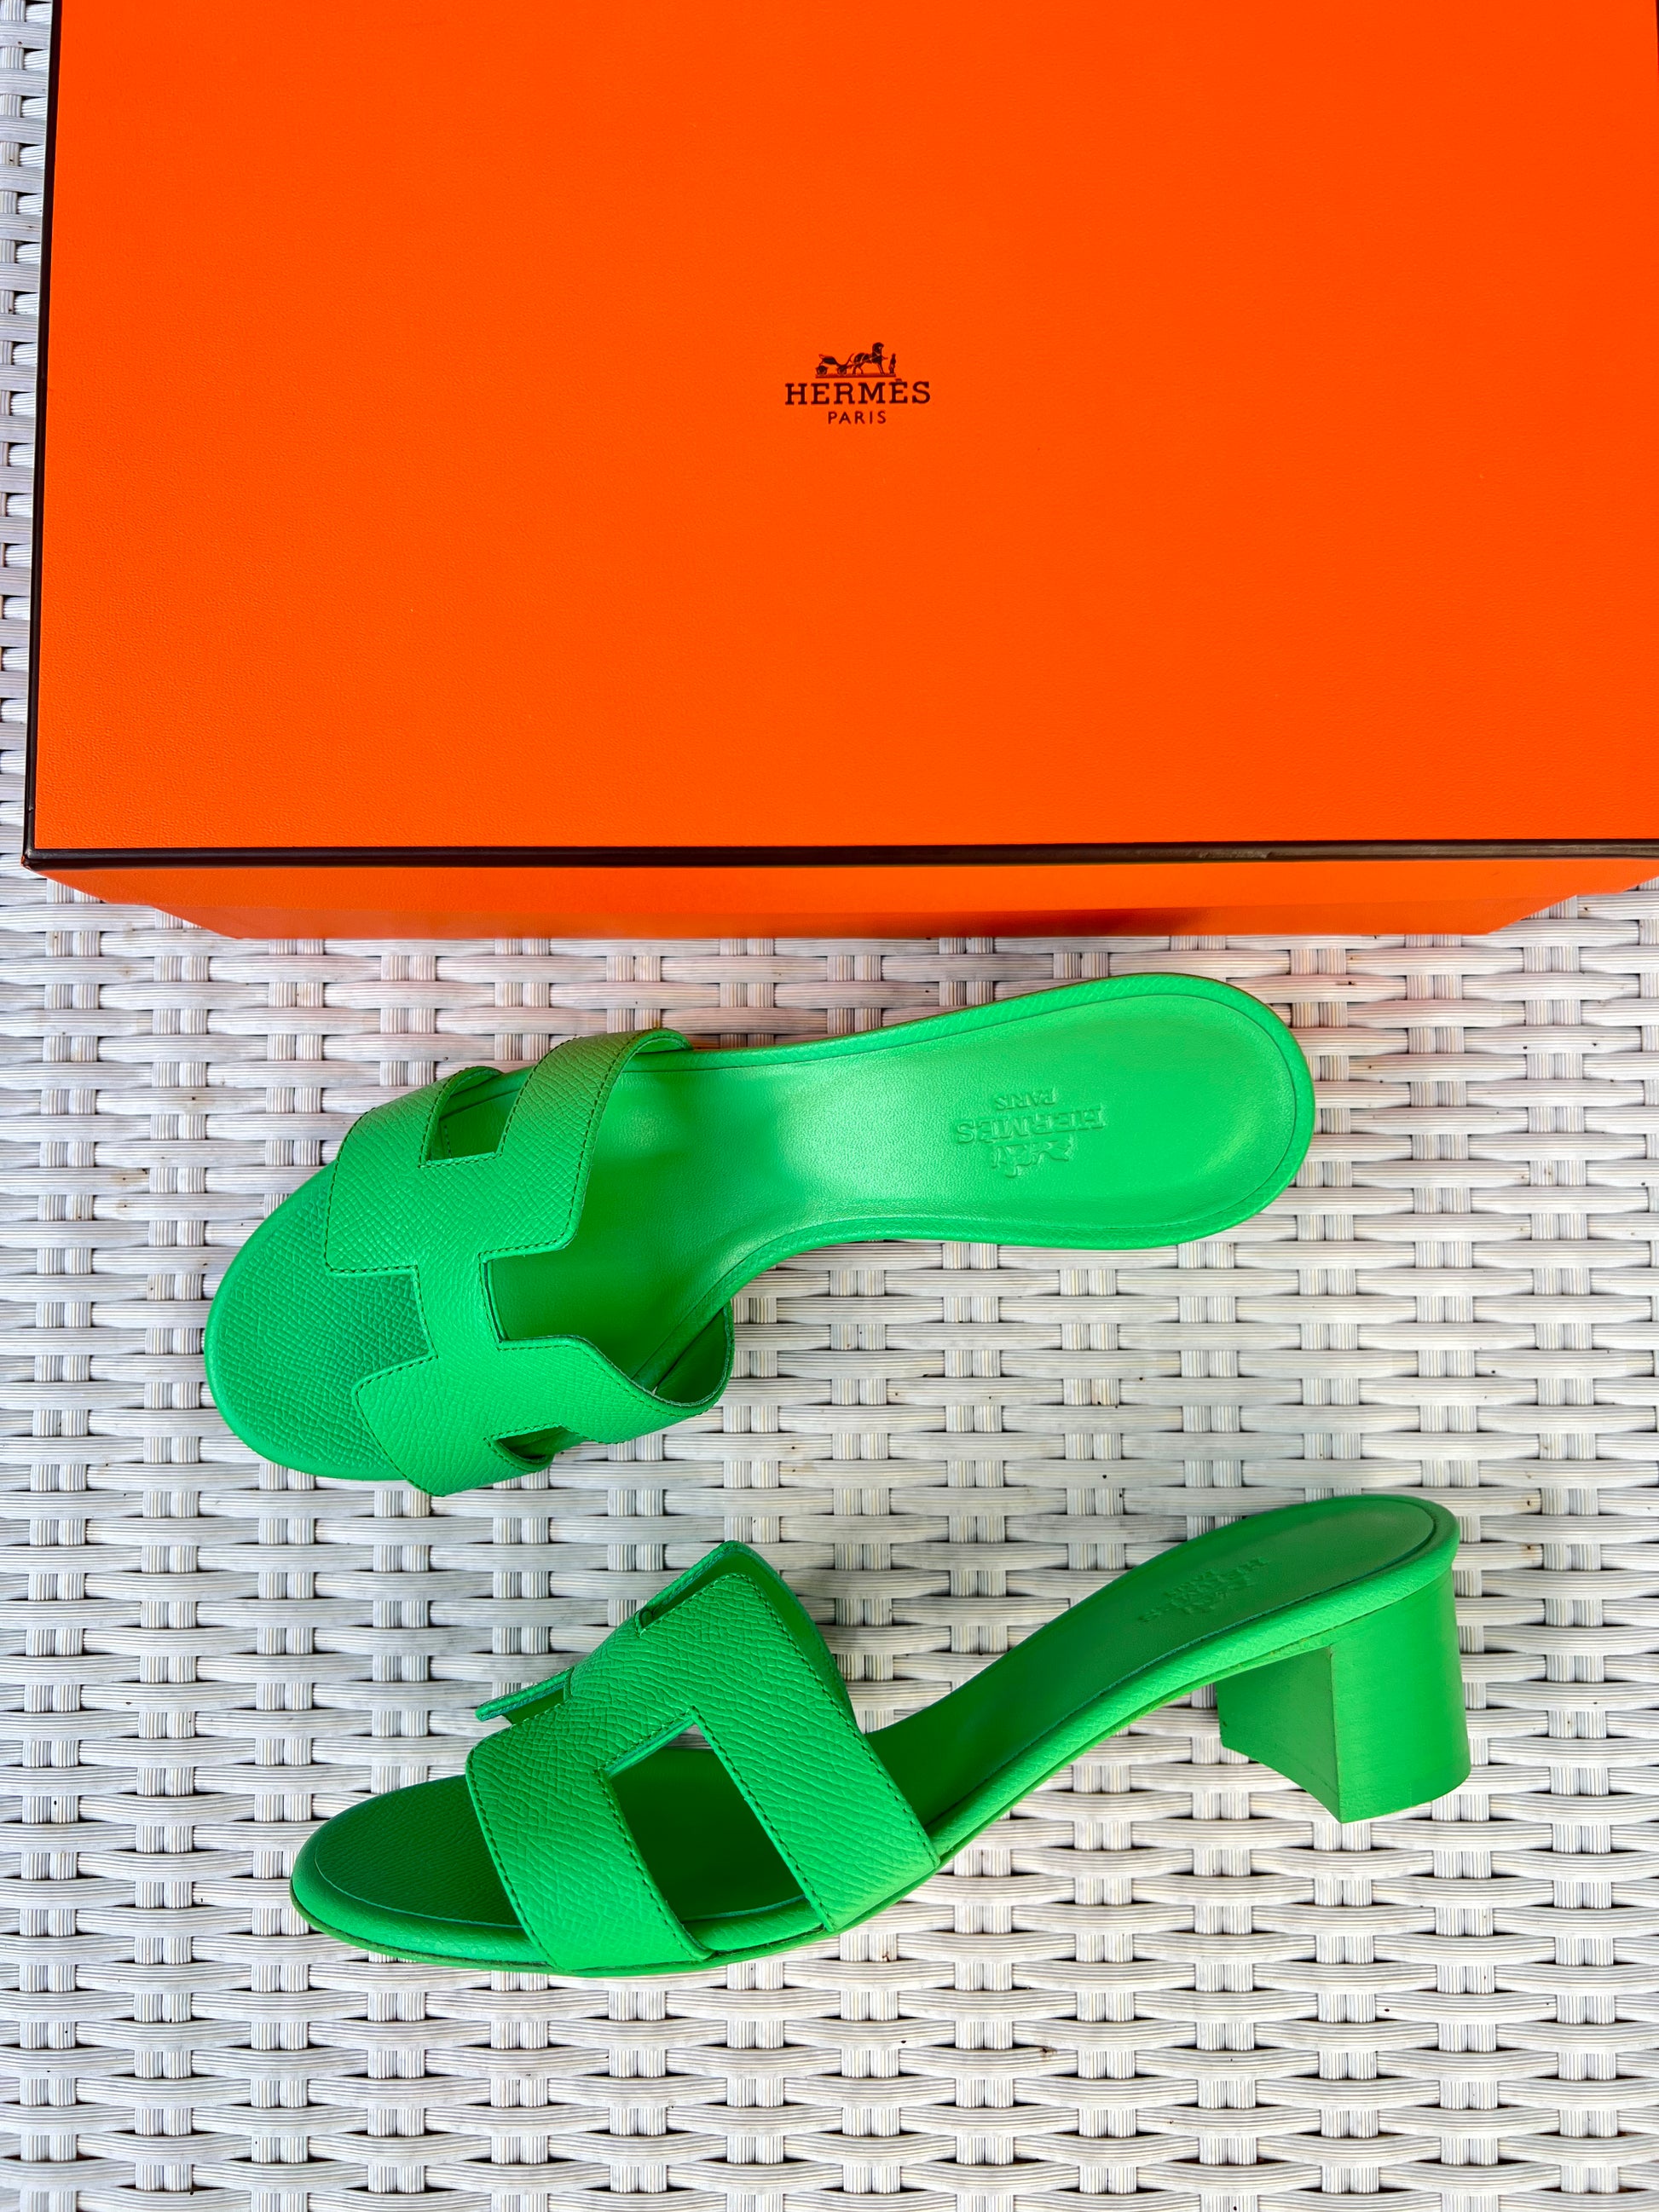 Louis Vuitton Olive Green 'Oasis' Sandals